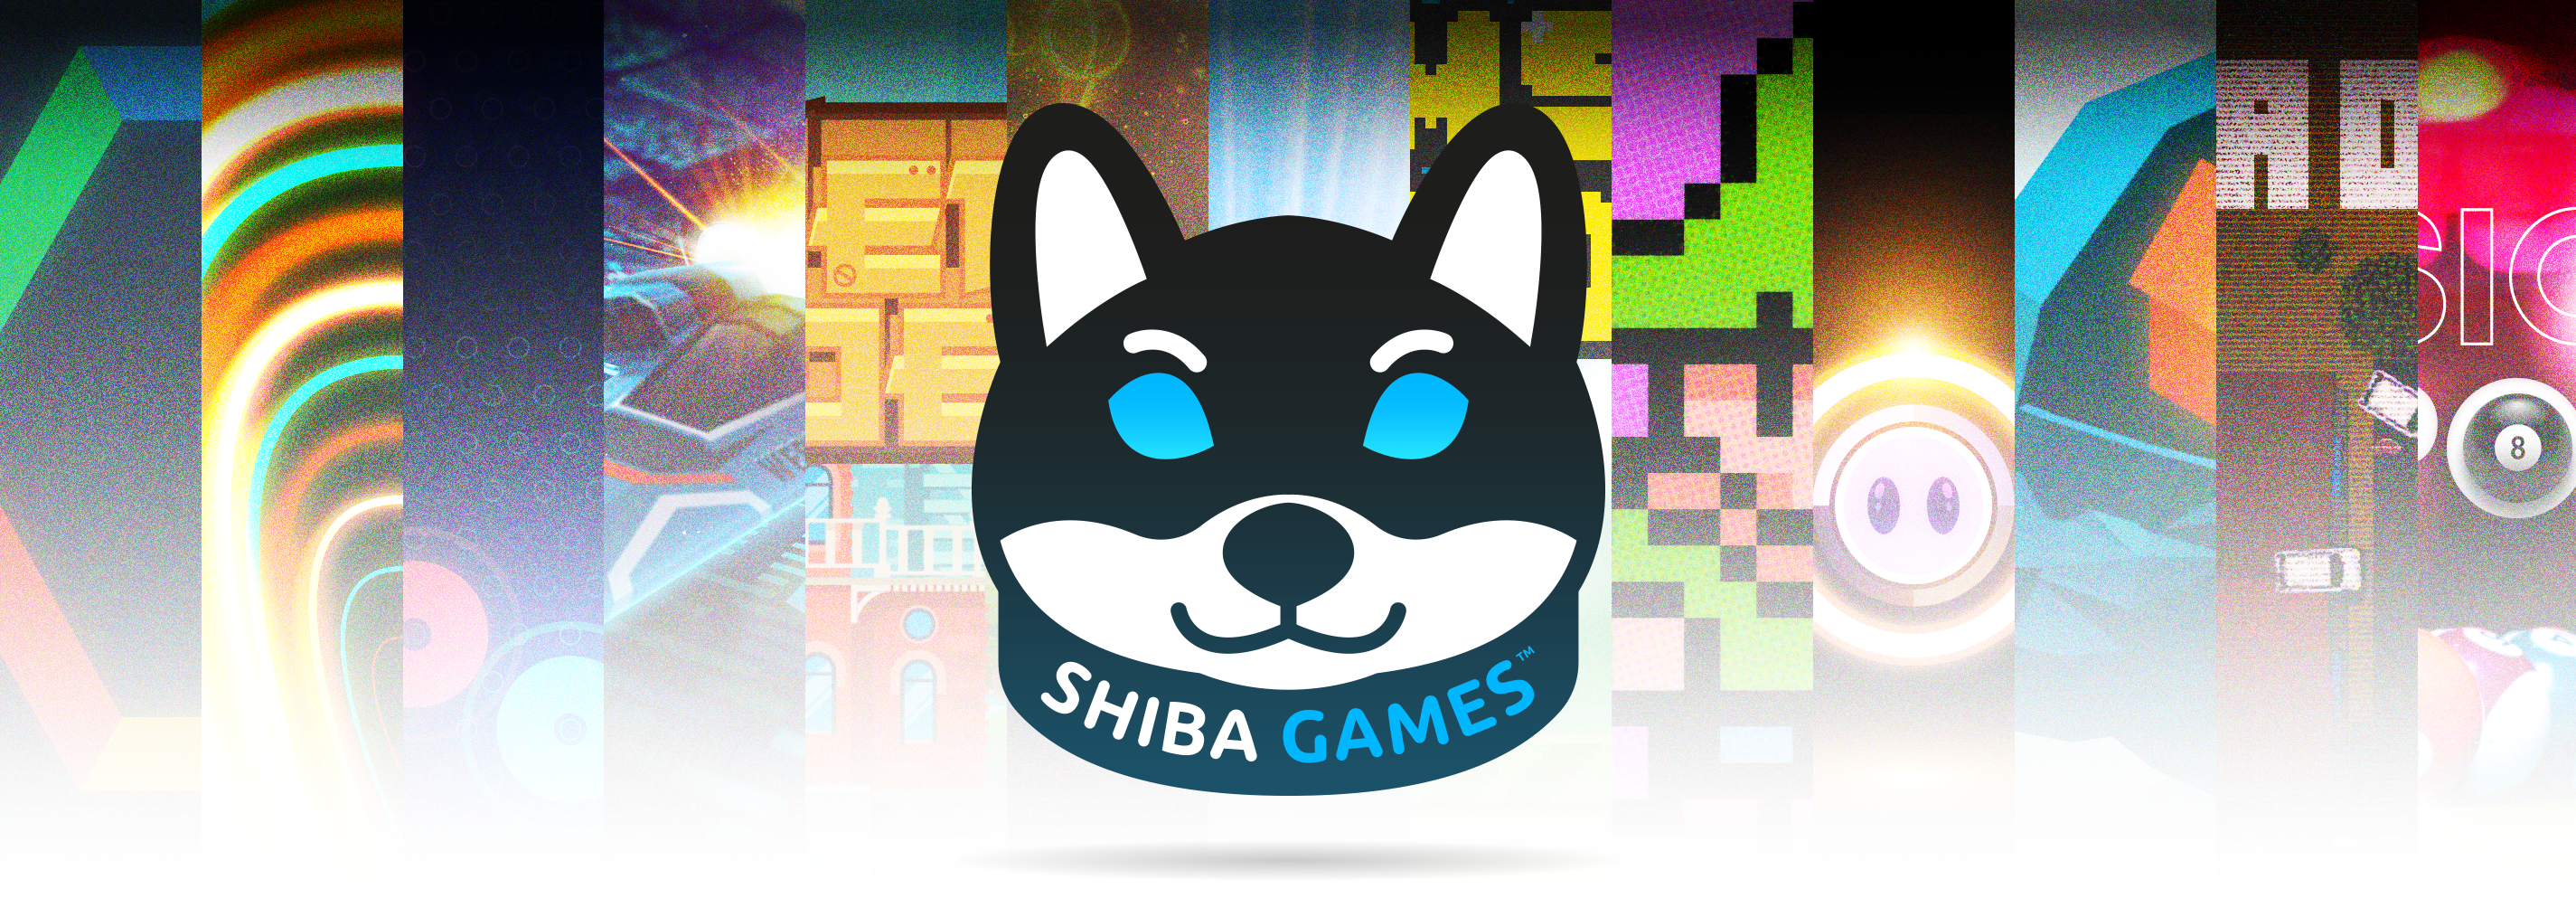 Shiba-Games